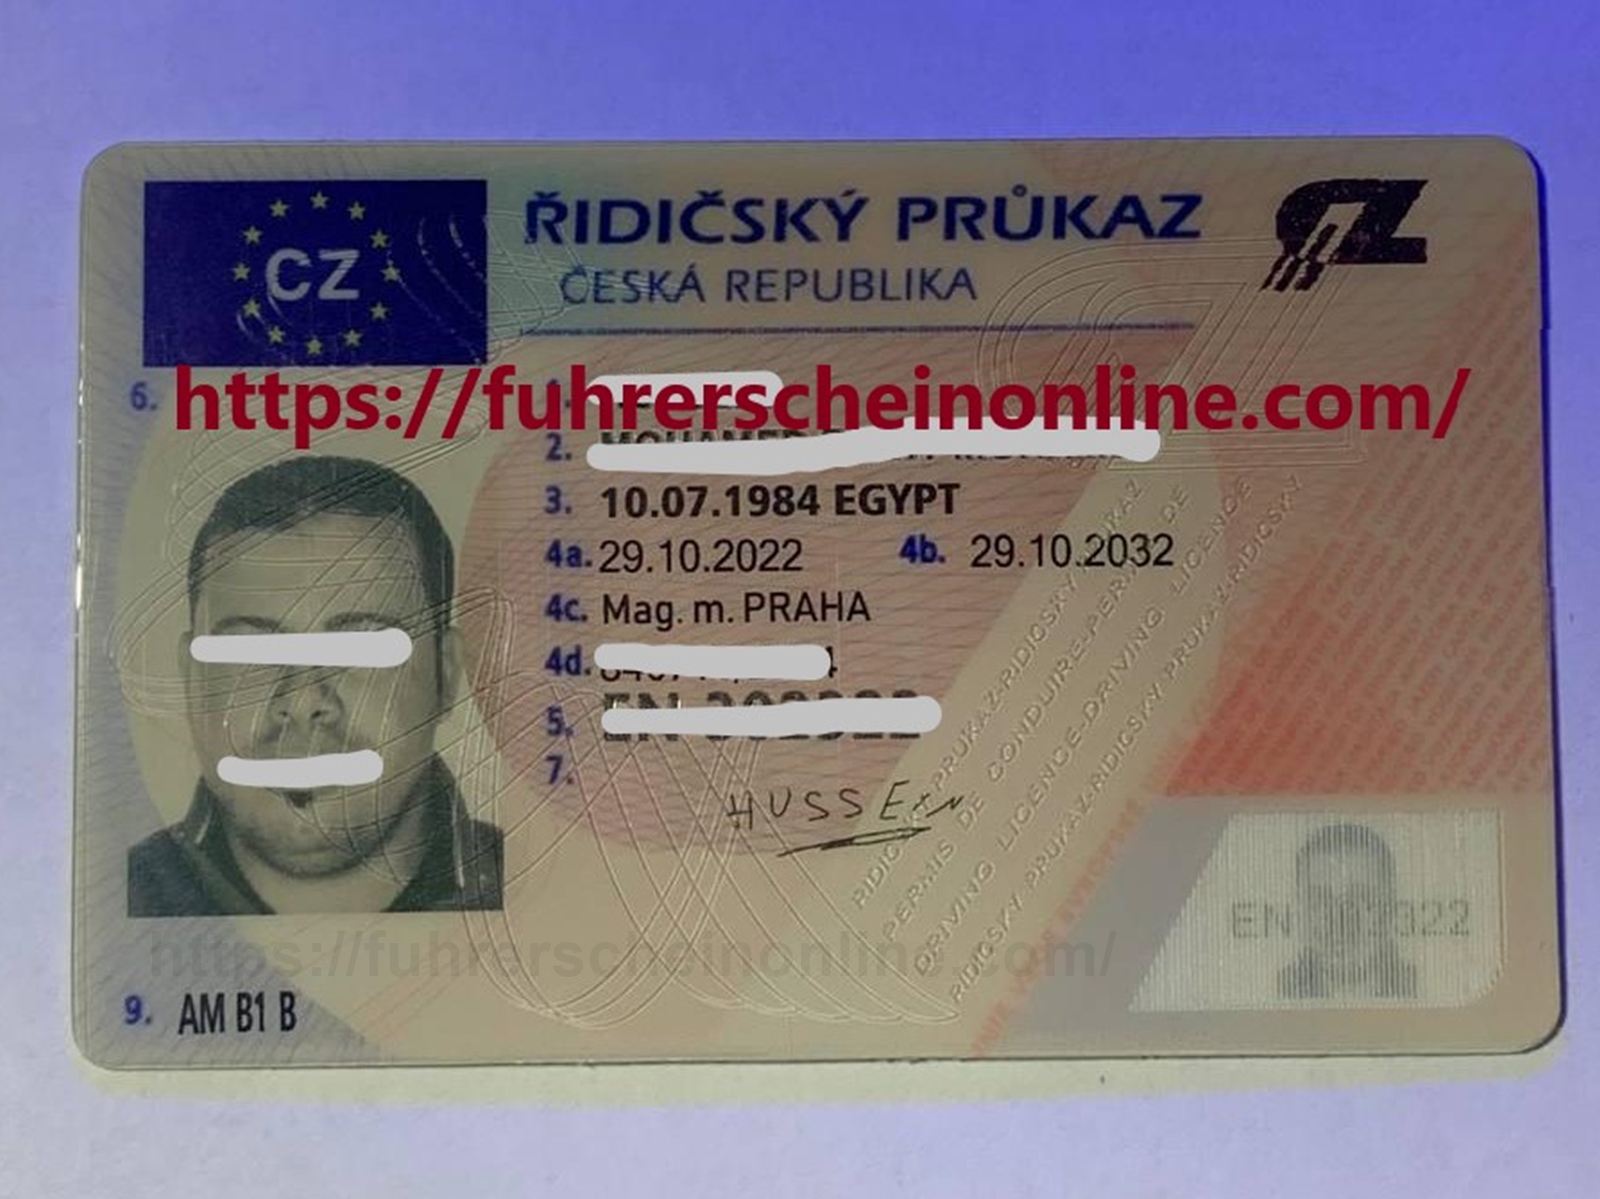 Buy a Czech Republic drivers license